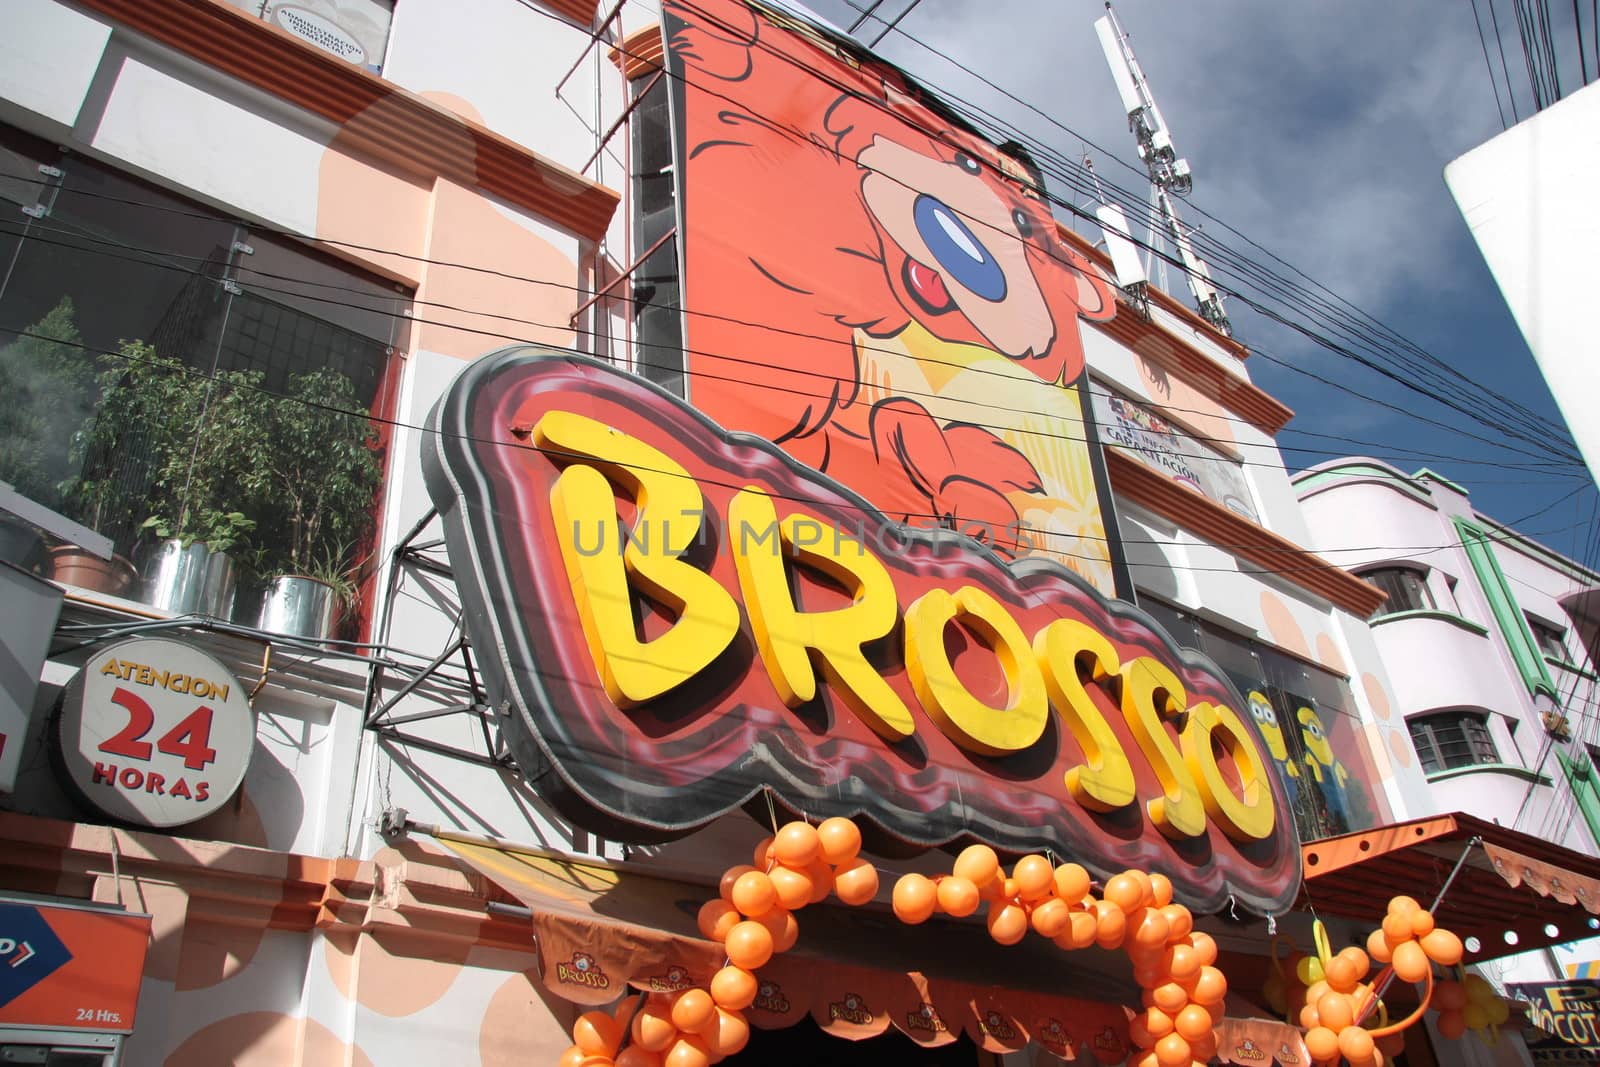 Brosso fast food restaurant sign in La Paz, Bolivia by jjspring